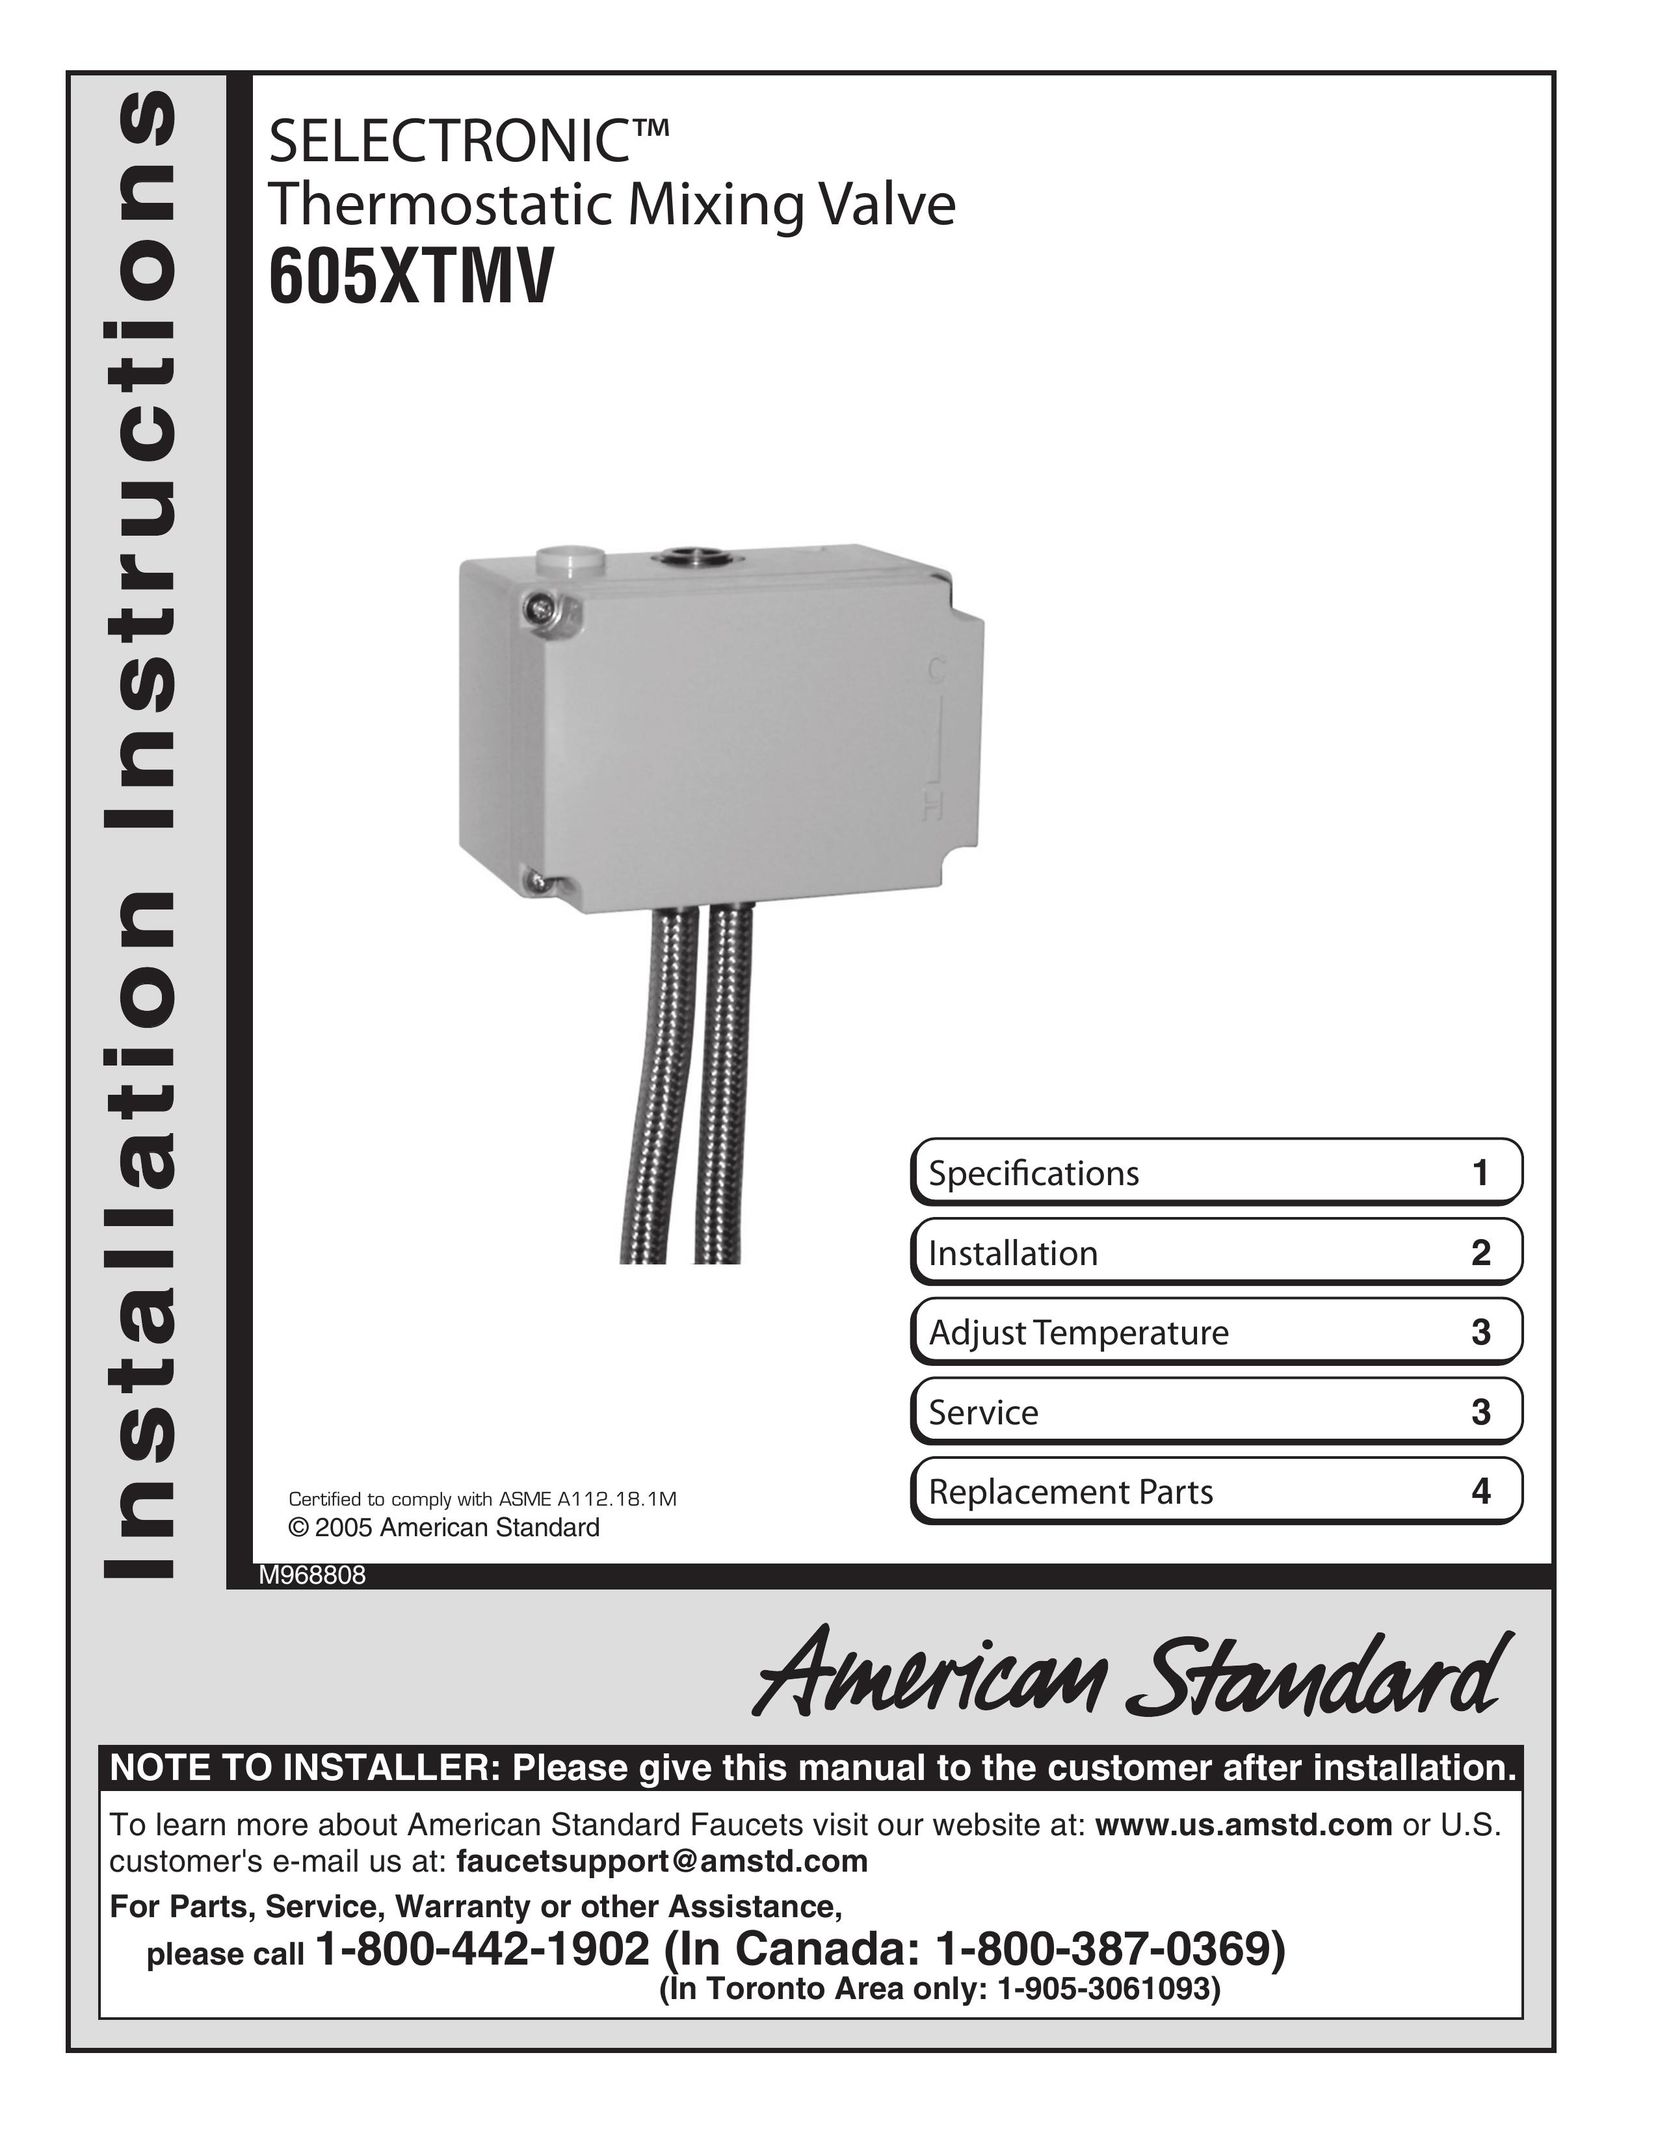 American Standard 605XTMV Thermostat User Manual